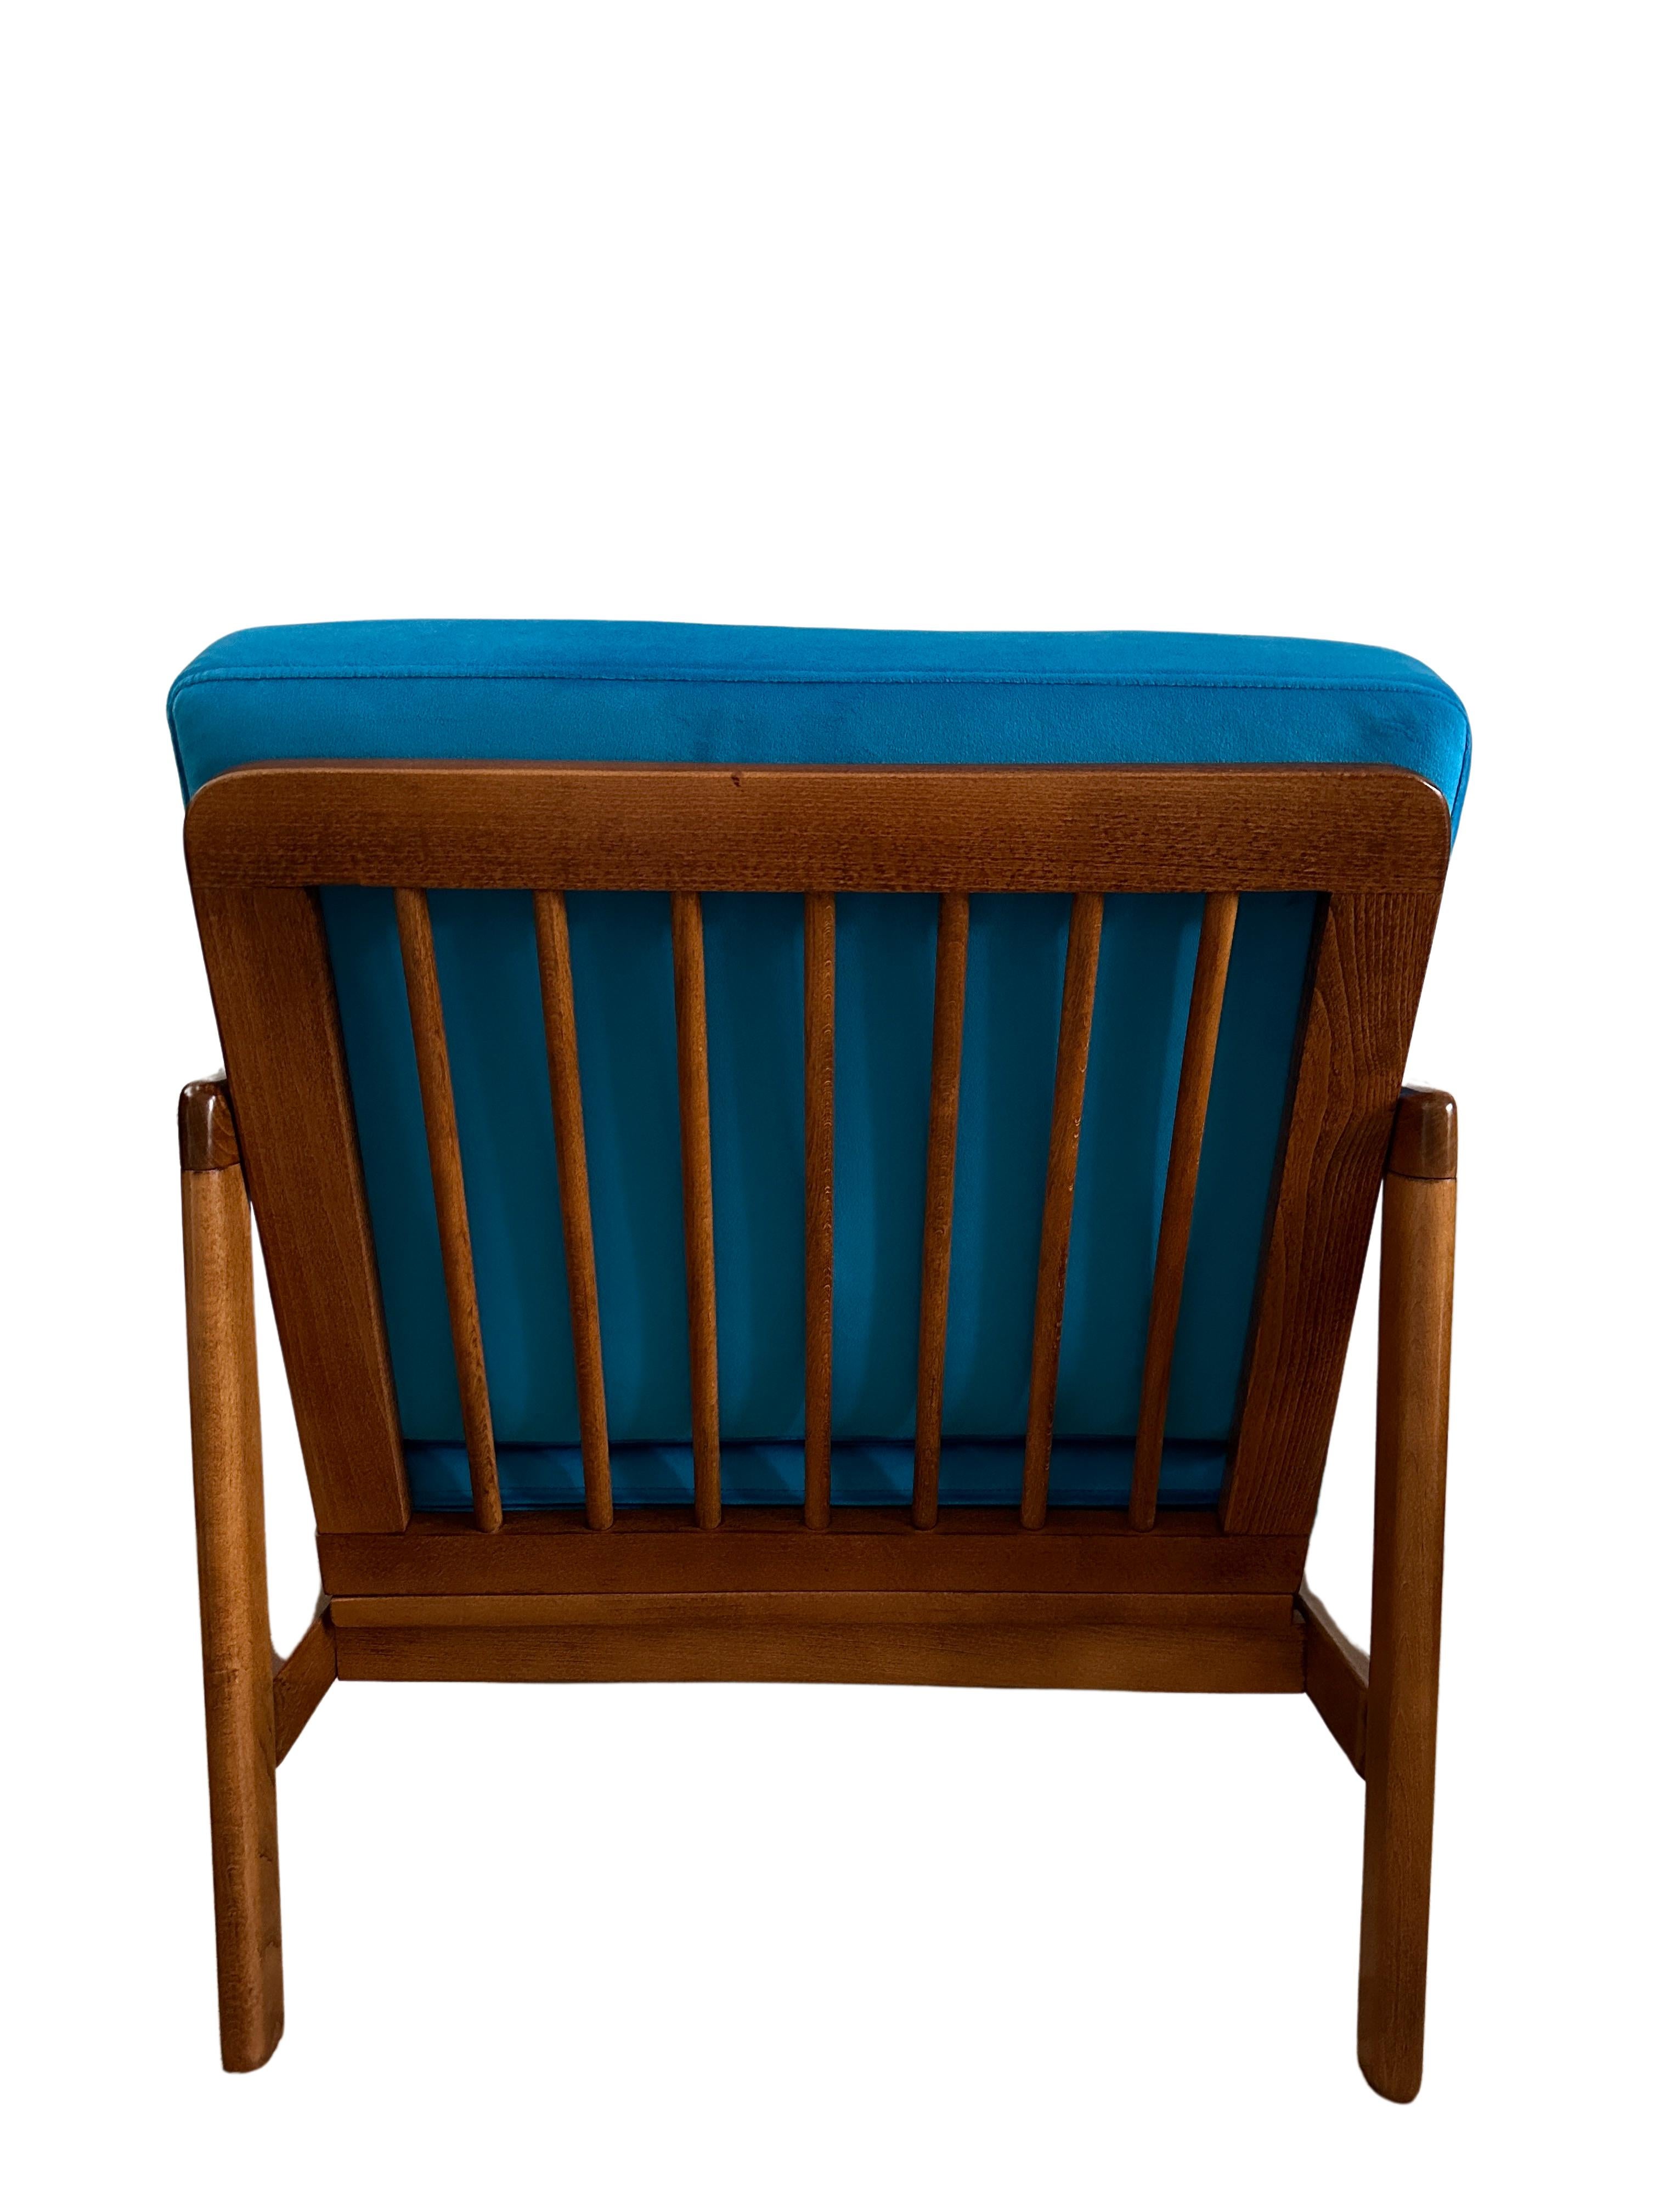 Midcentury Armchair by Zenon Baczyk, Blue Velvet Upholstery, Poland, 1960s For Sale 1